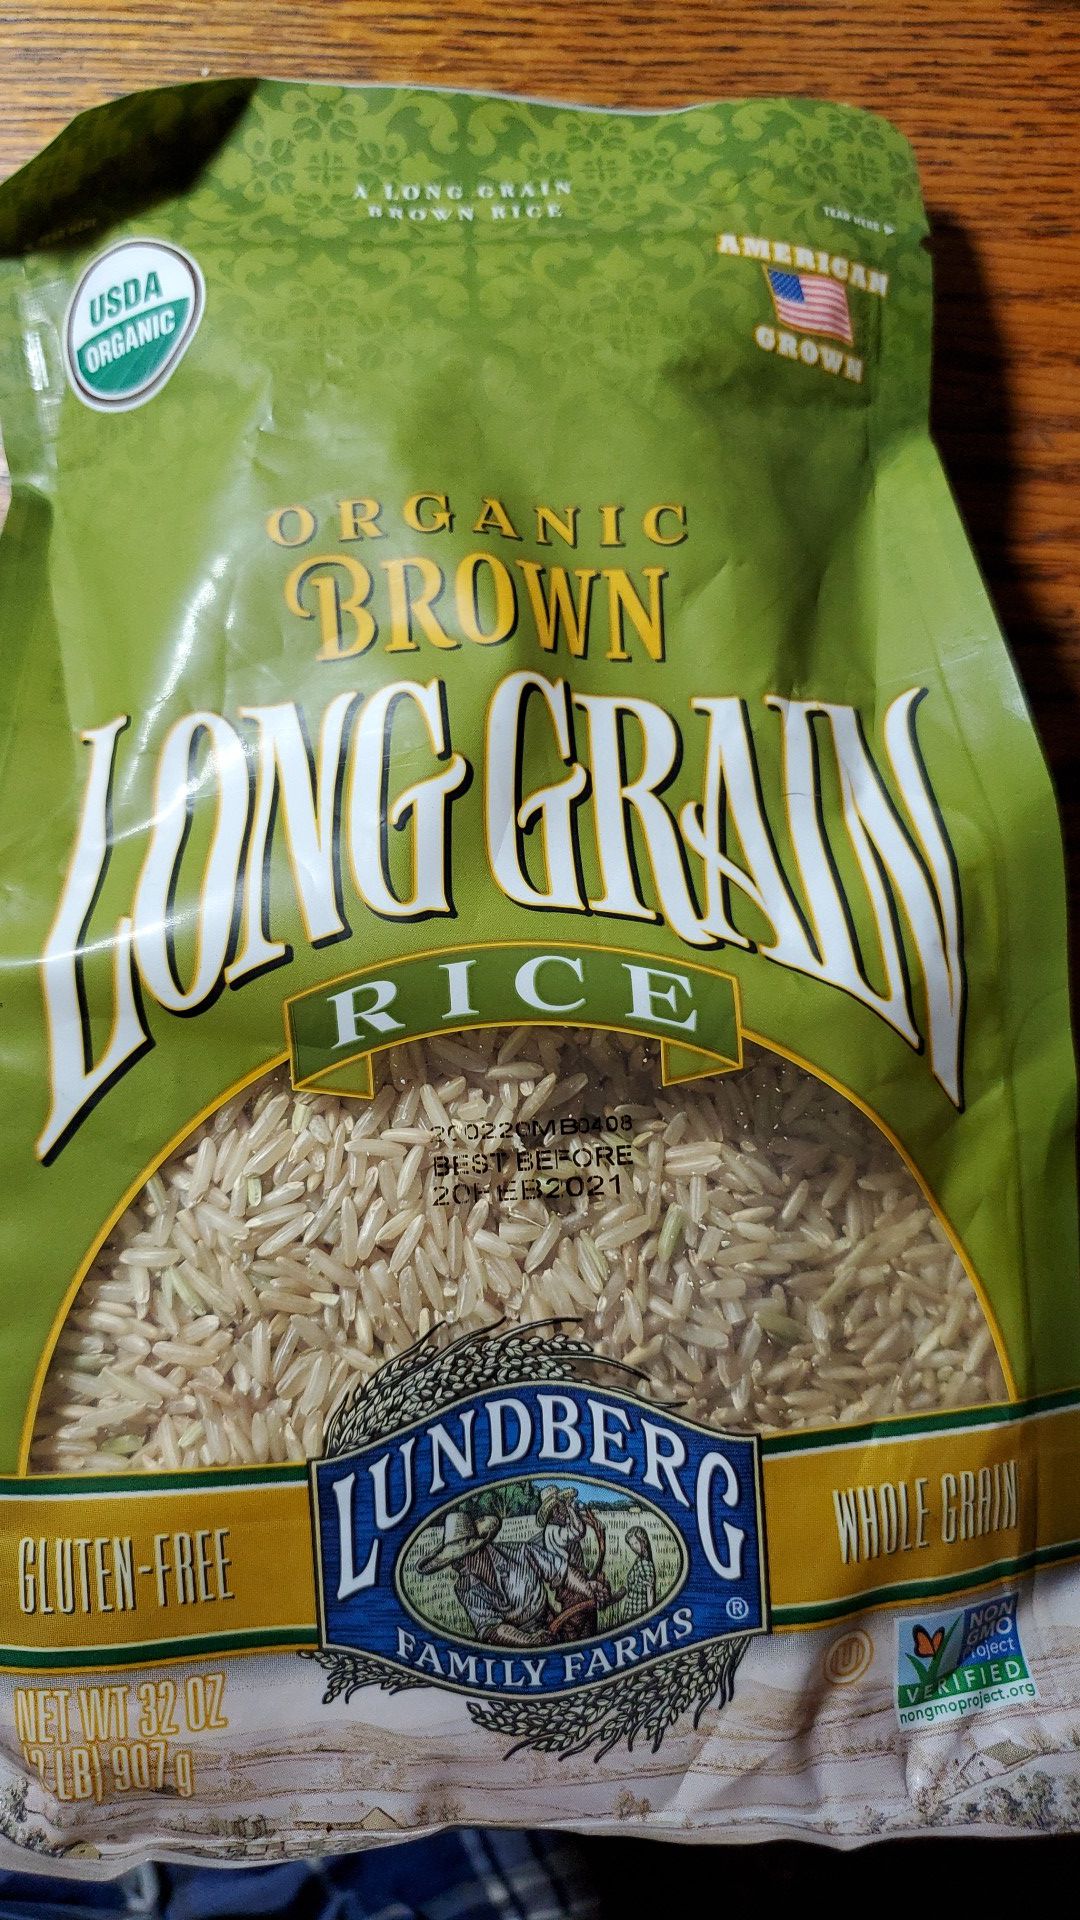 Lundenberg organic brown long grain rice 1/2 lb bag best before February 2021 $2